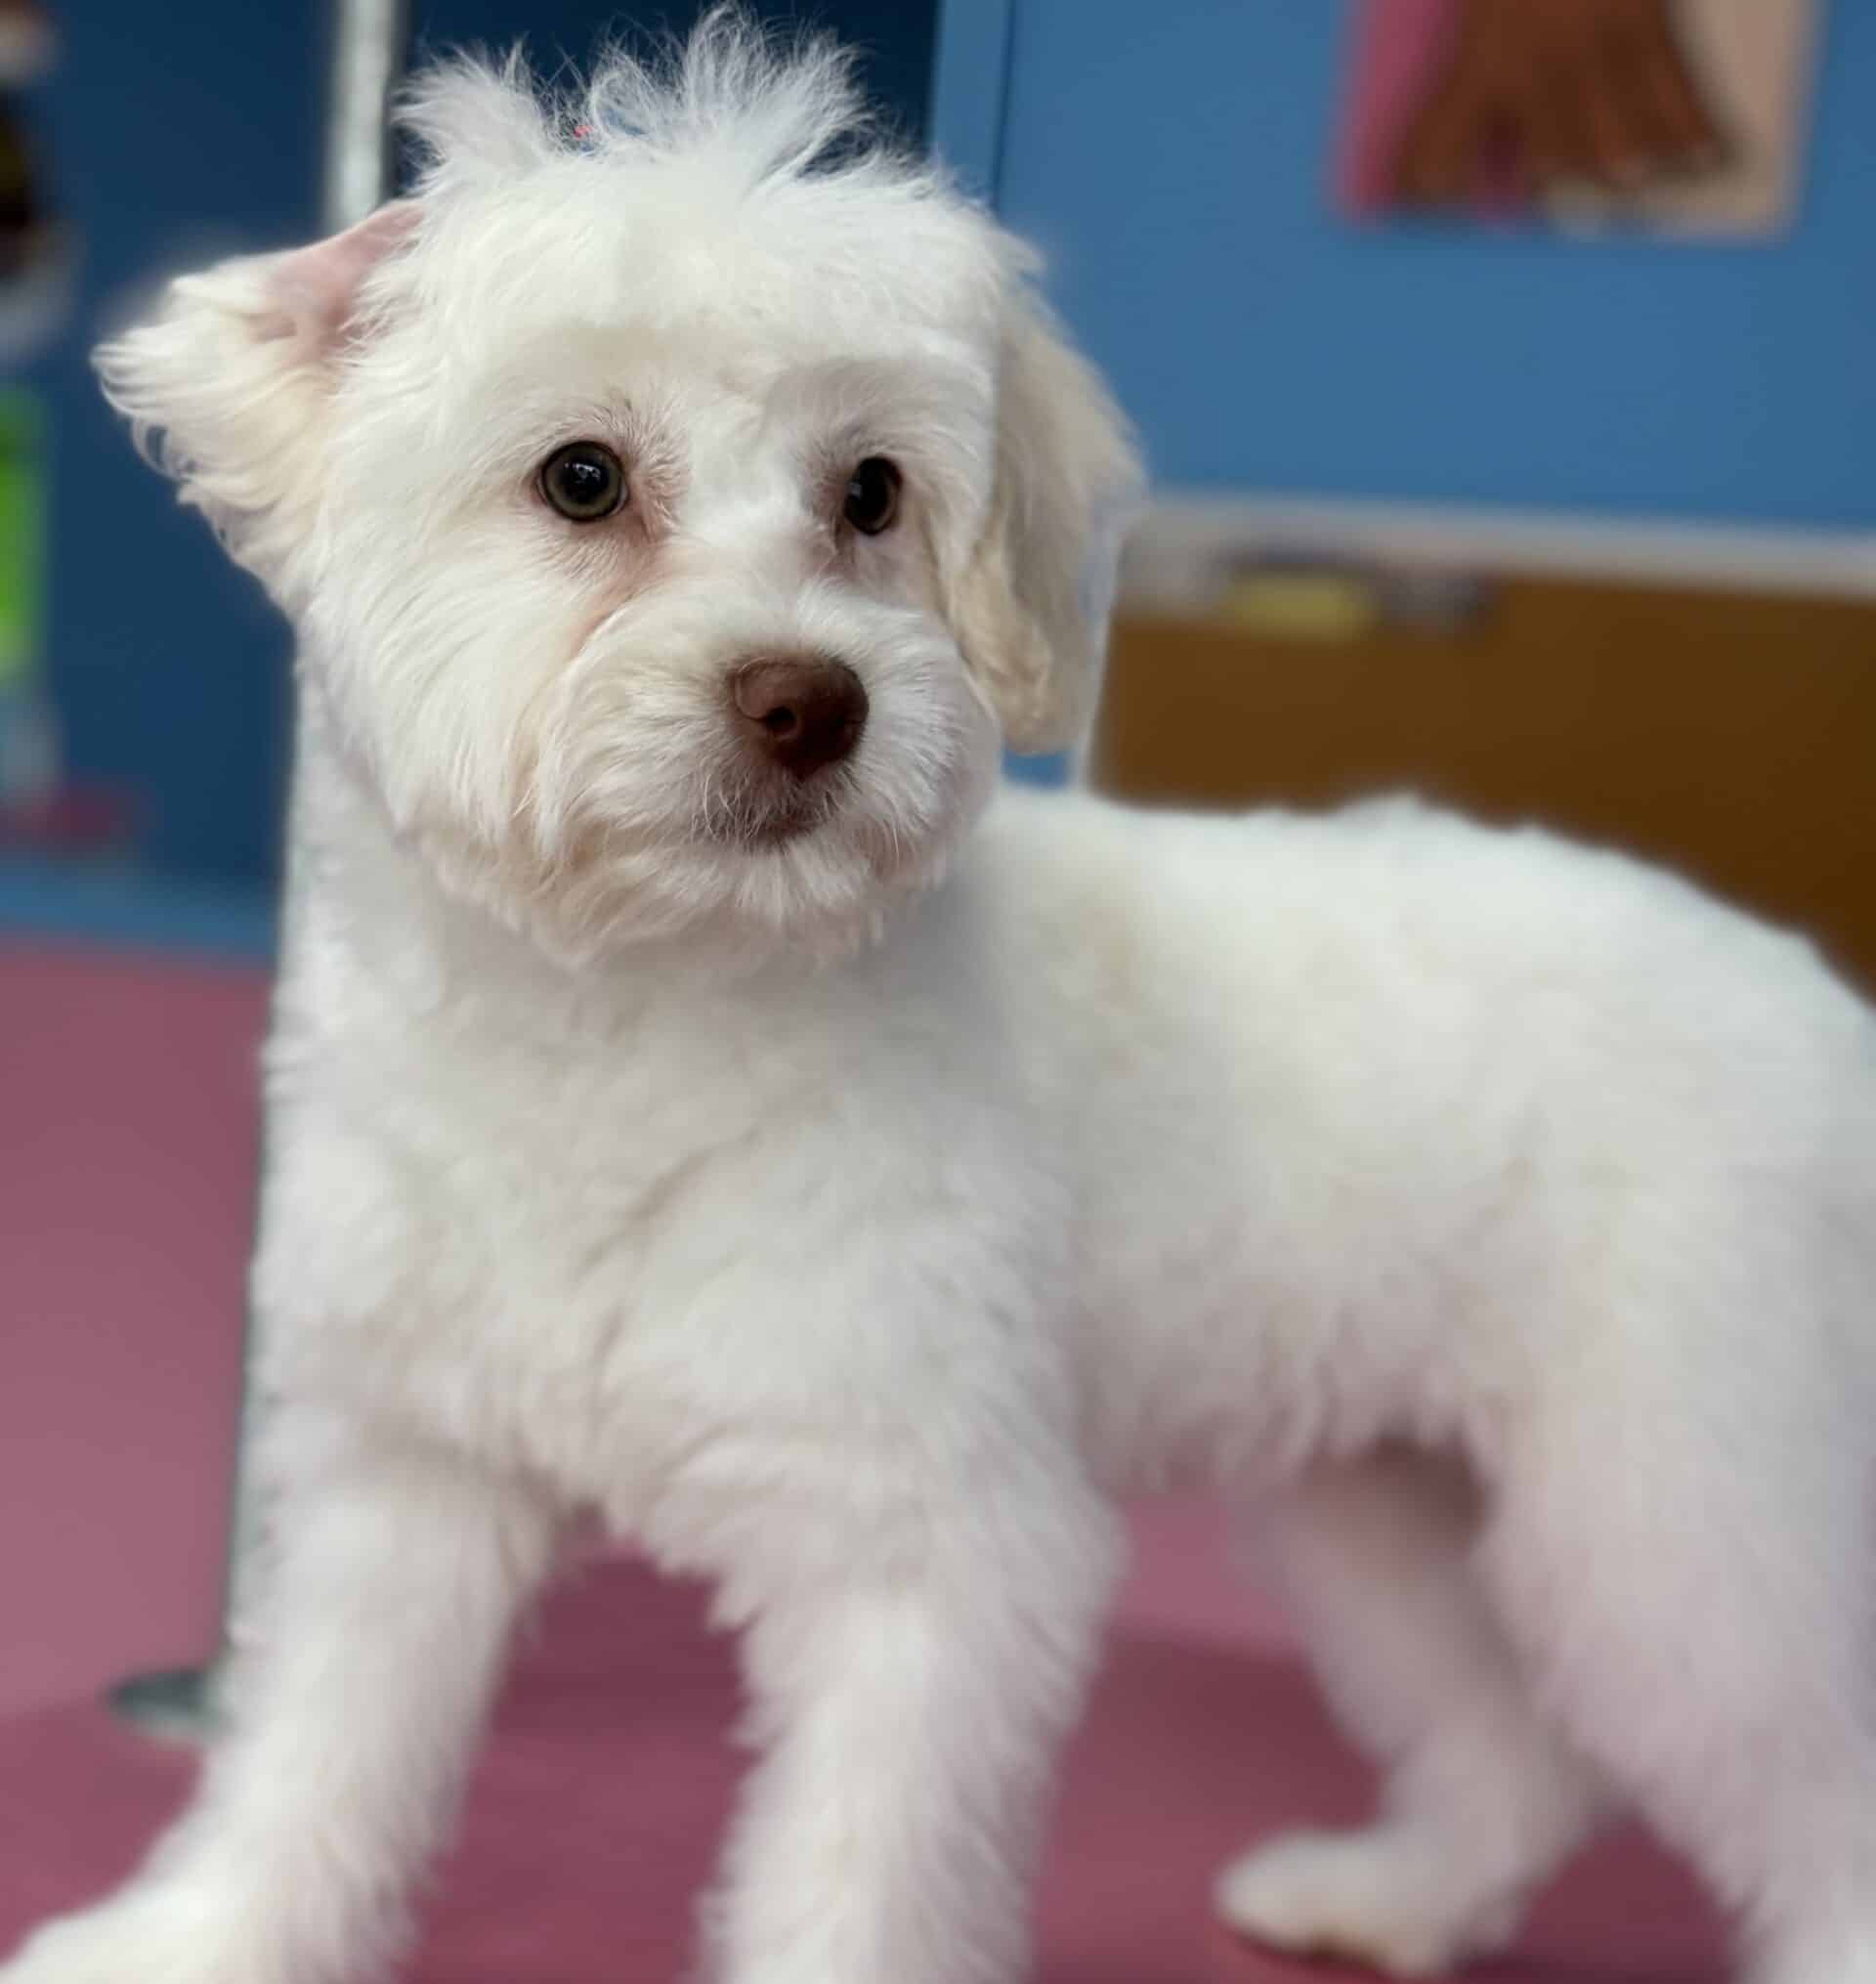 Adorable cream miniature poodle available